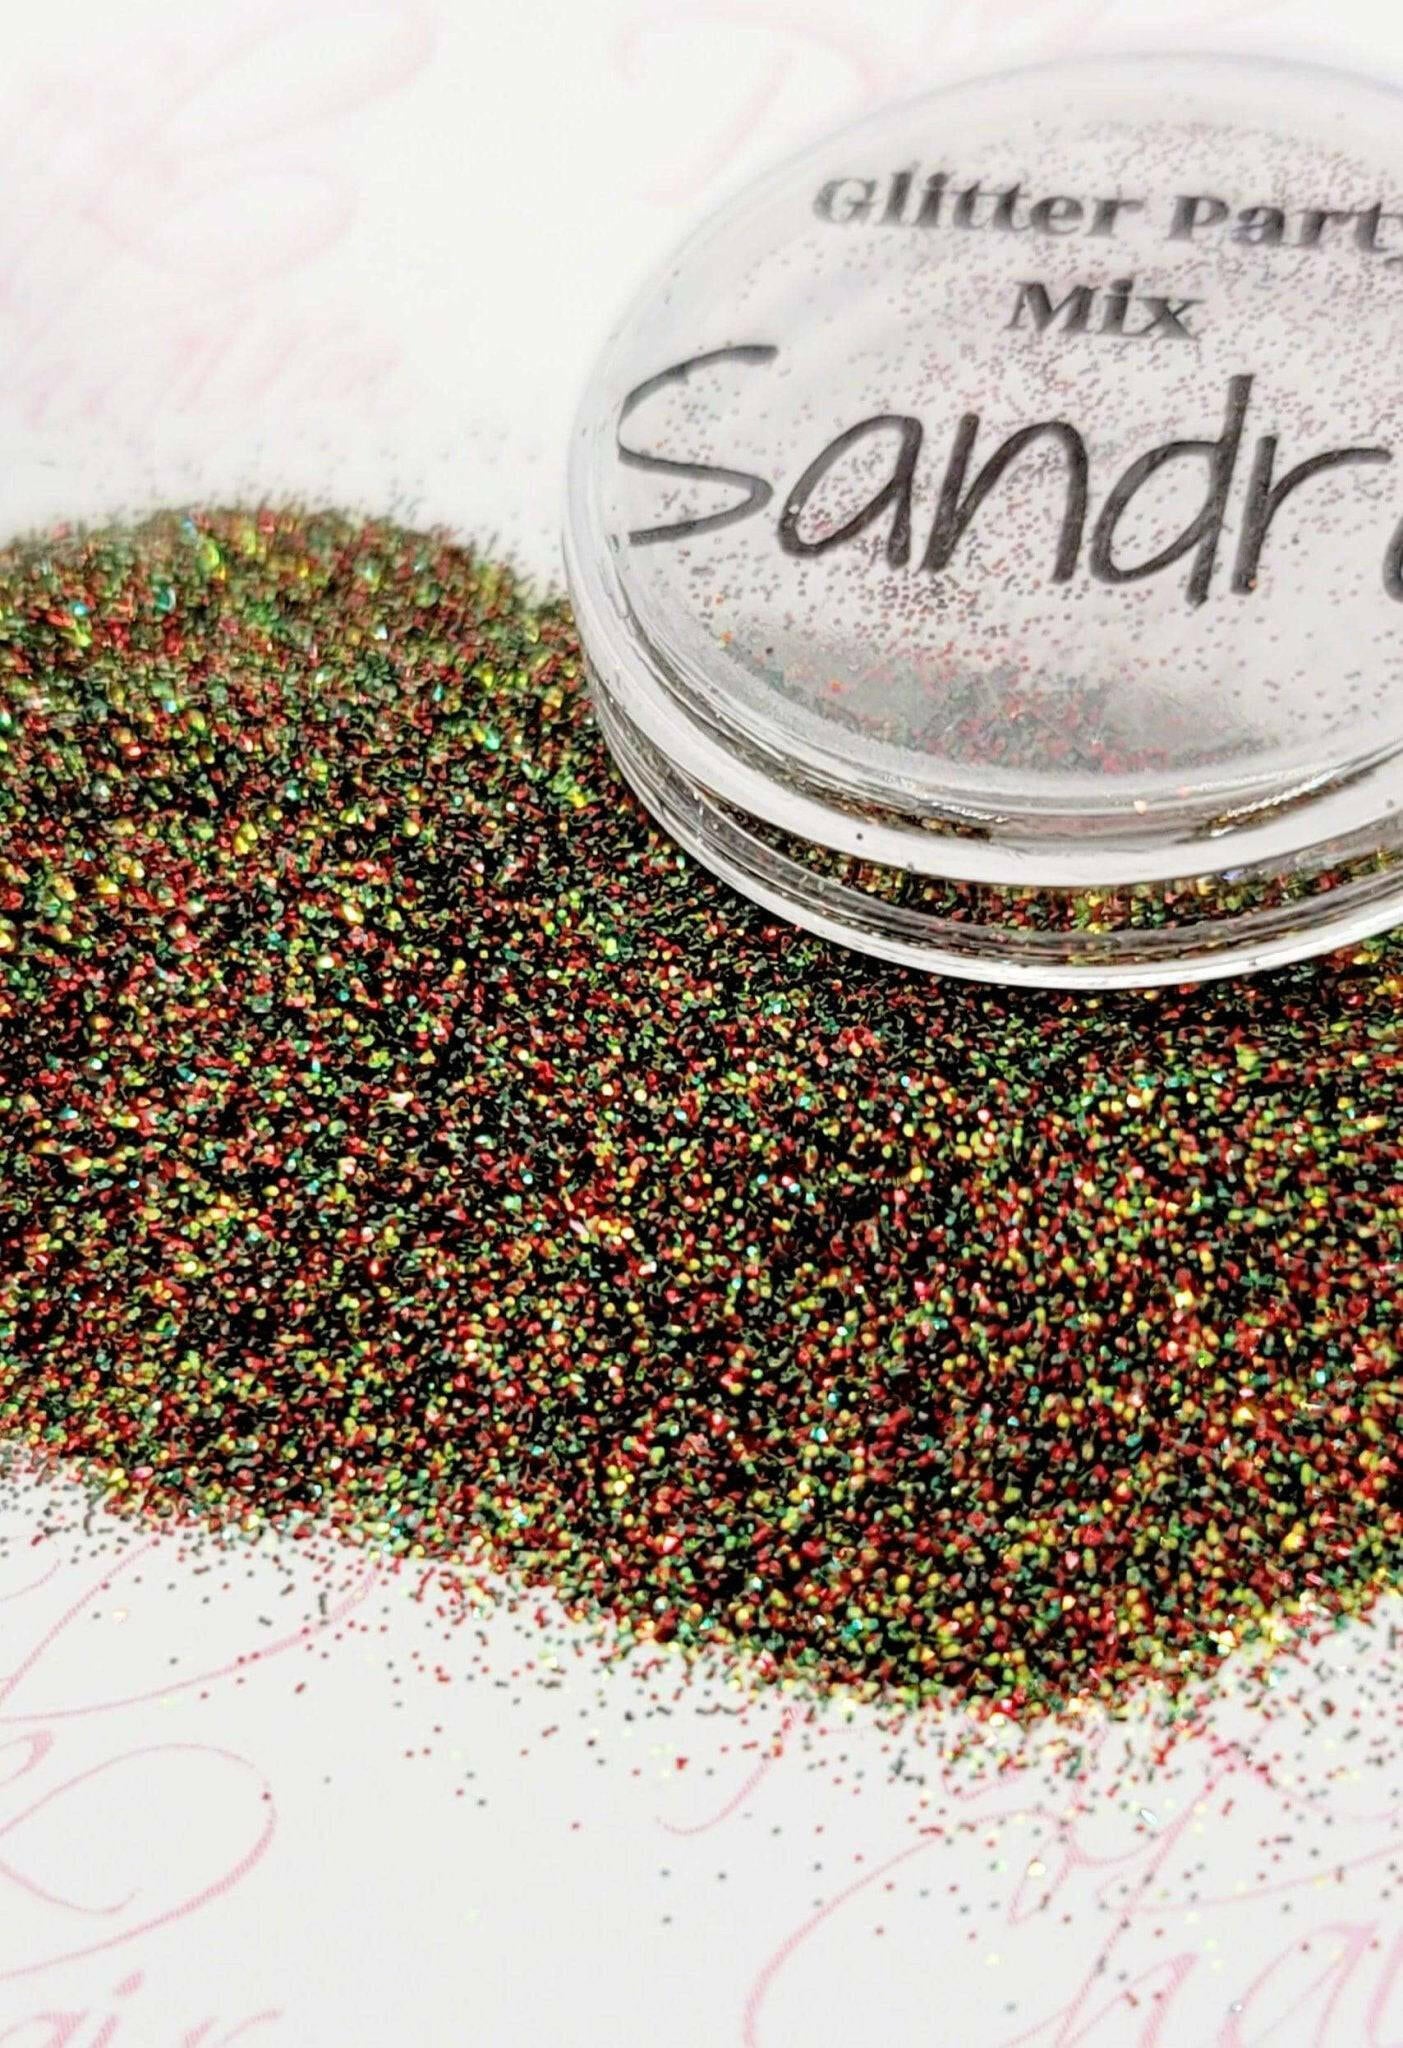 Sandra, Glitter Party Mix (322) - thePINKchair.ca - Glitter - thePINKchair nail studio